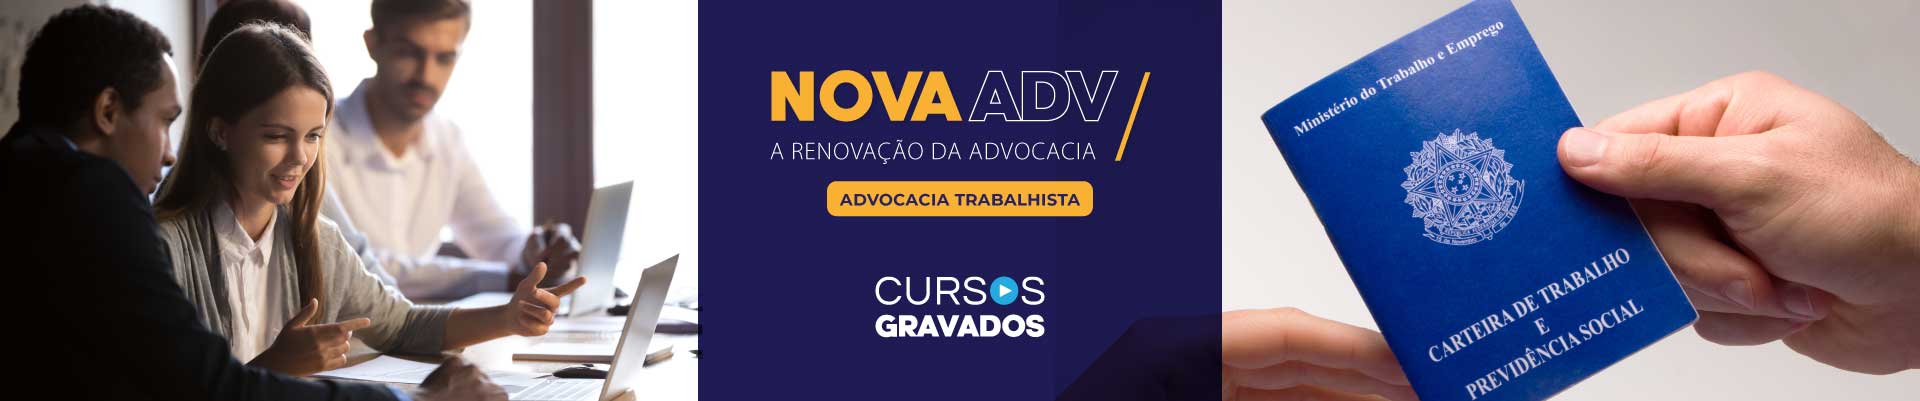 NovaAdv - Advocacia Trabalhista - Módulo 1